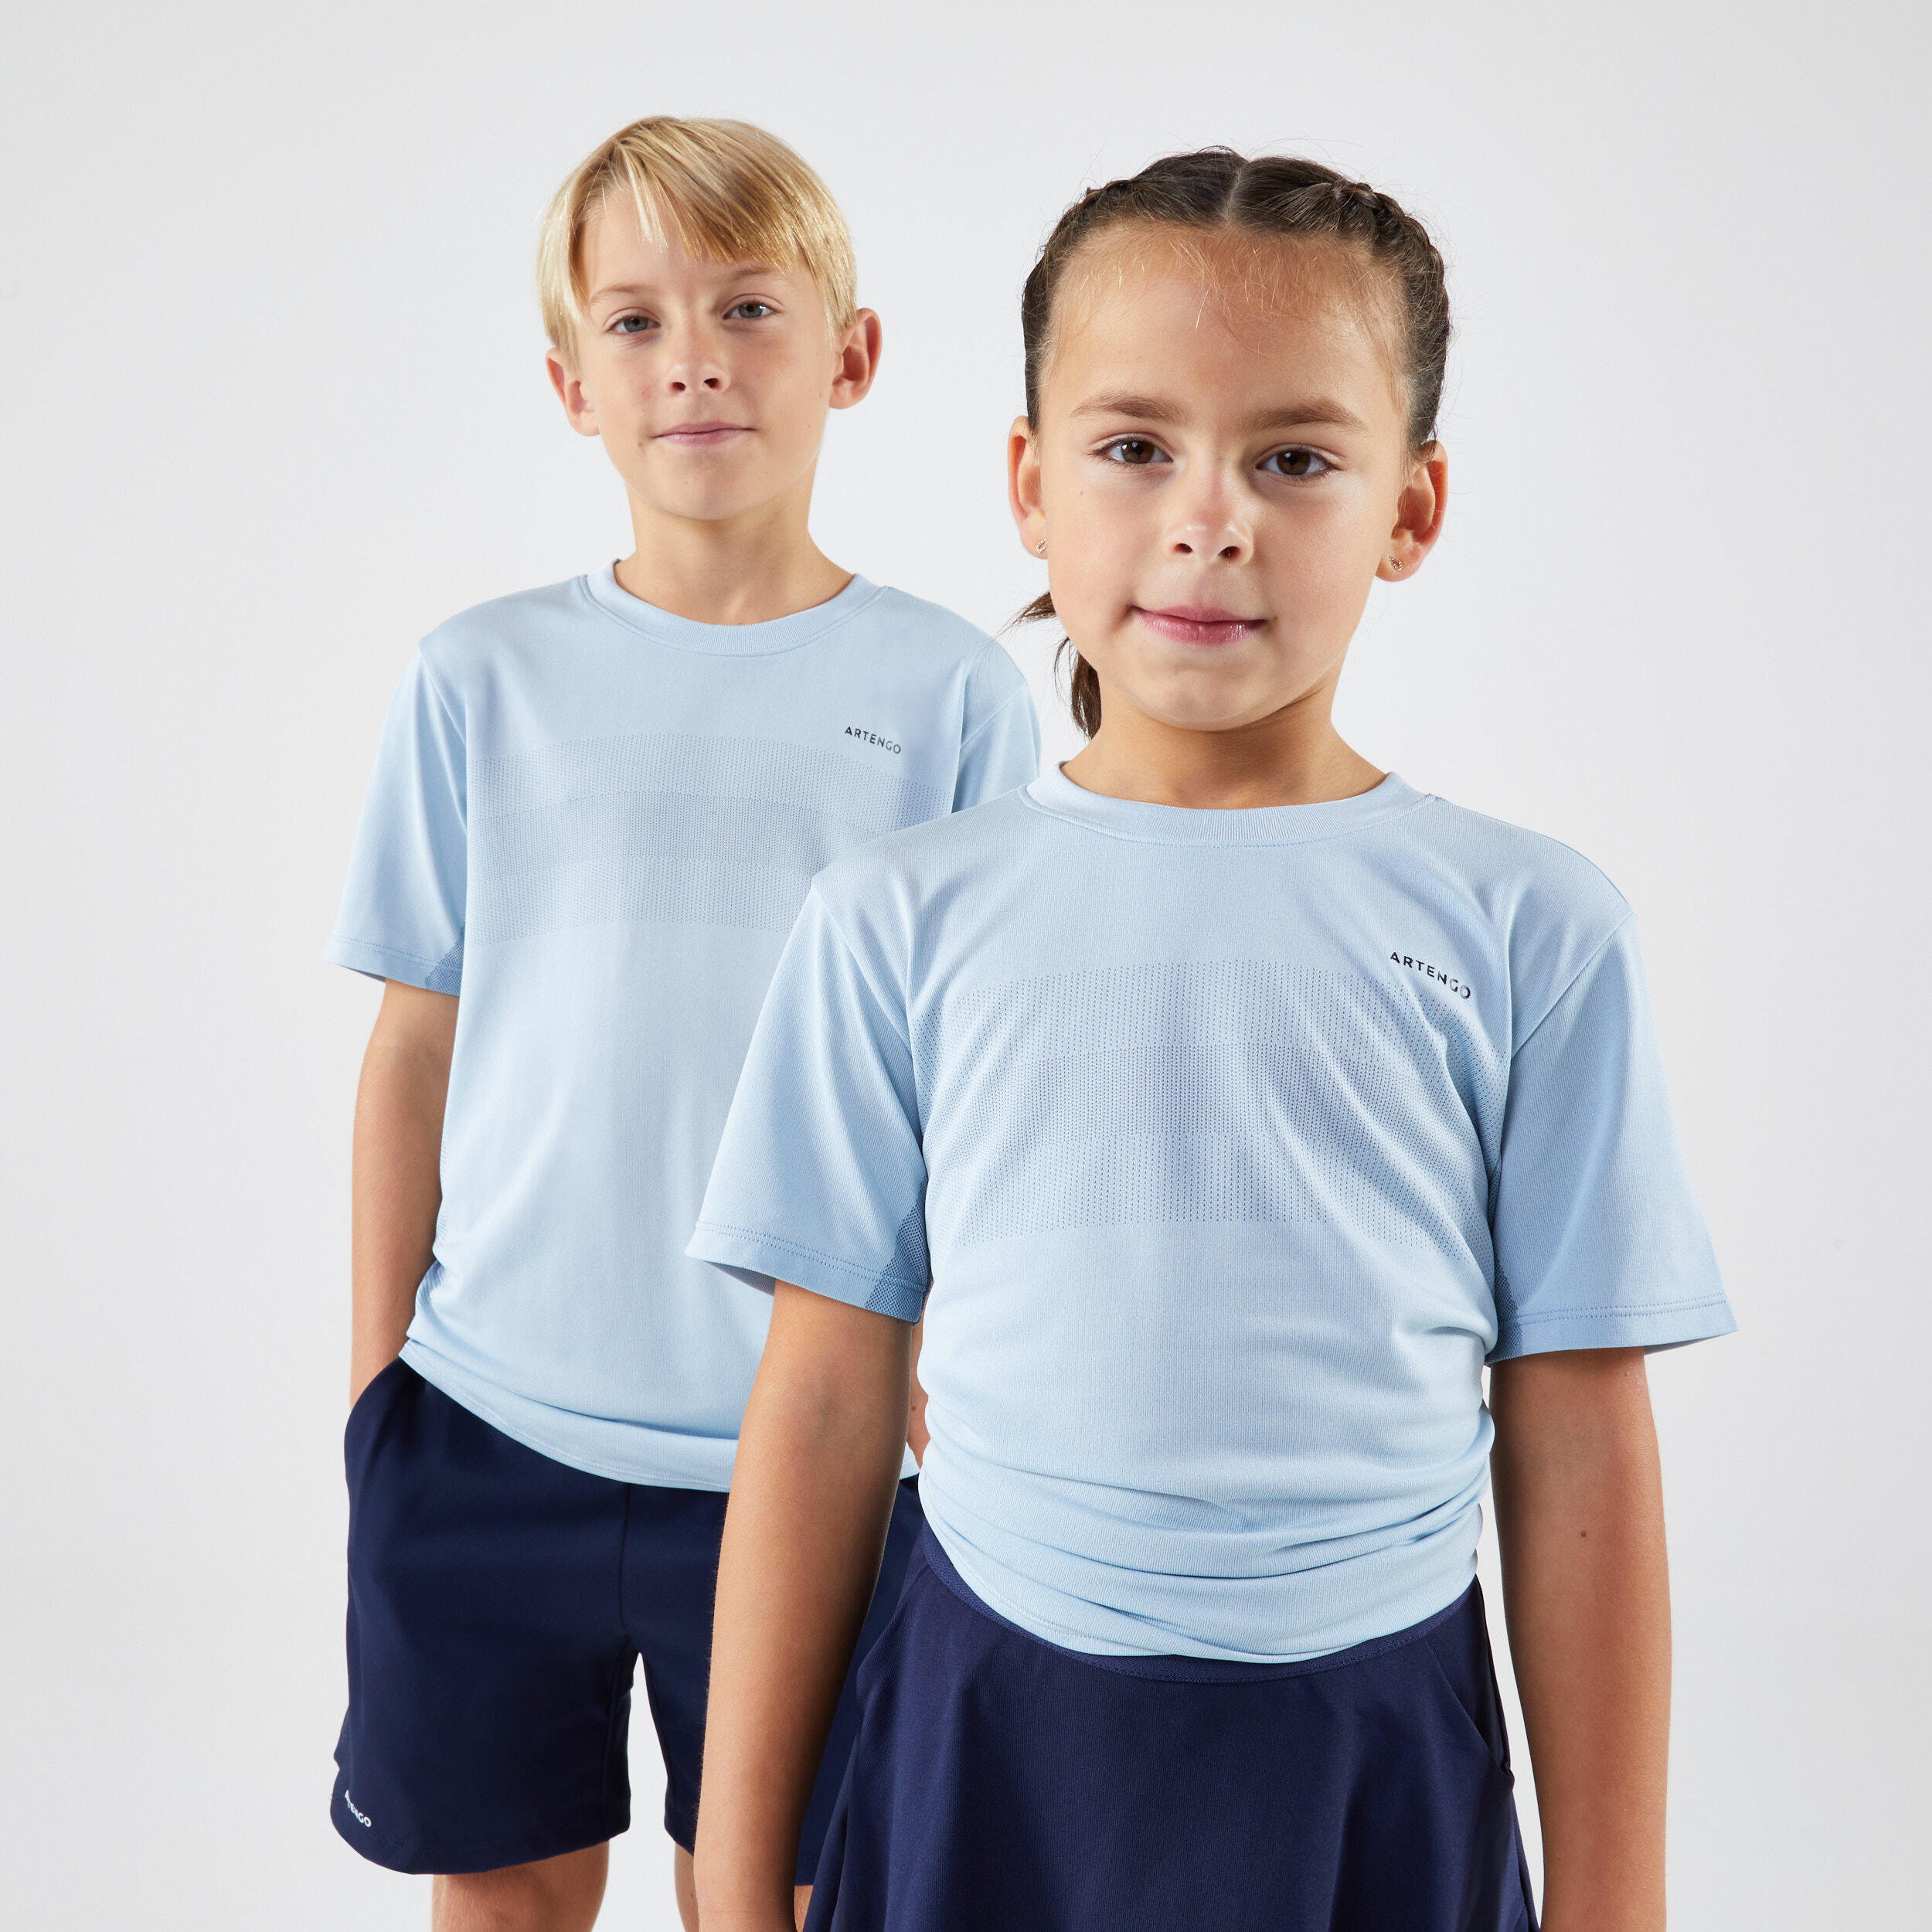 Decathlon | T-shirt tennis bambino LIGHT azzurra |  Artengo